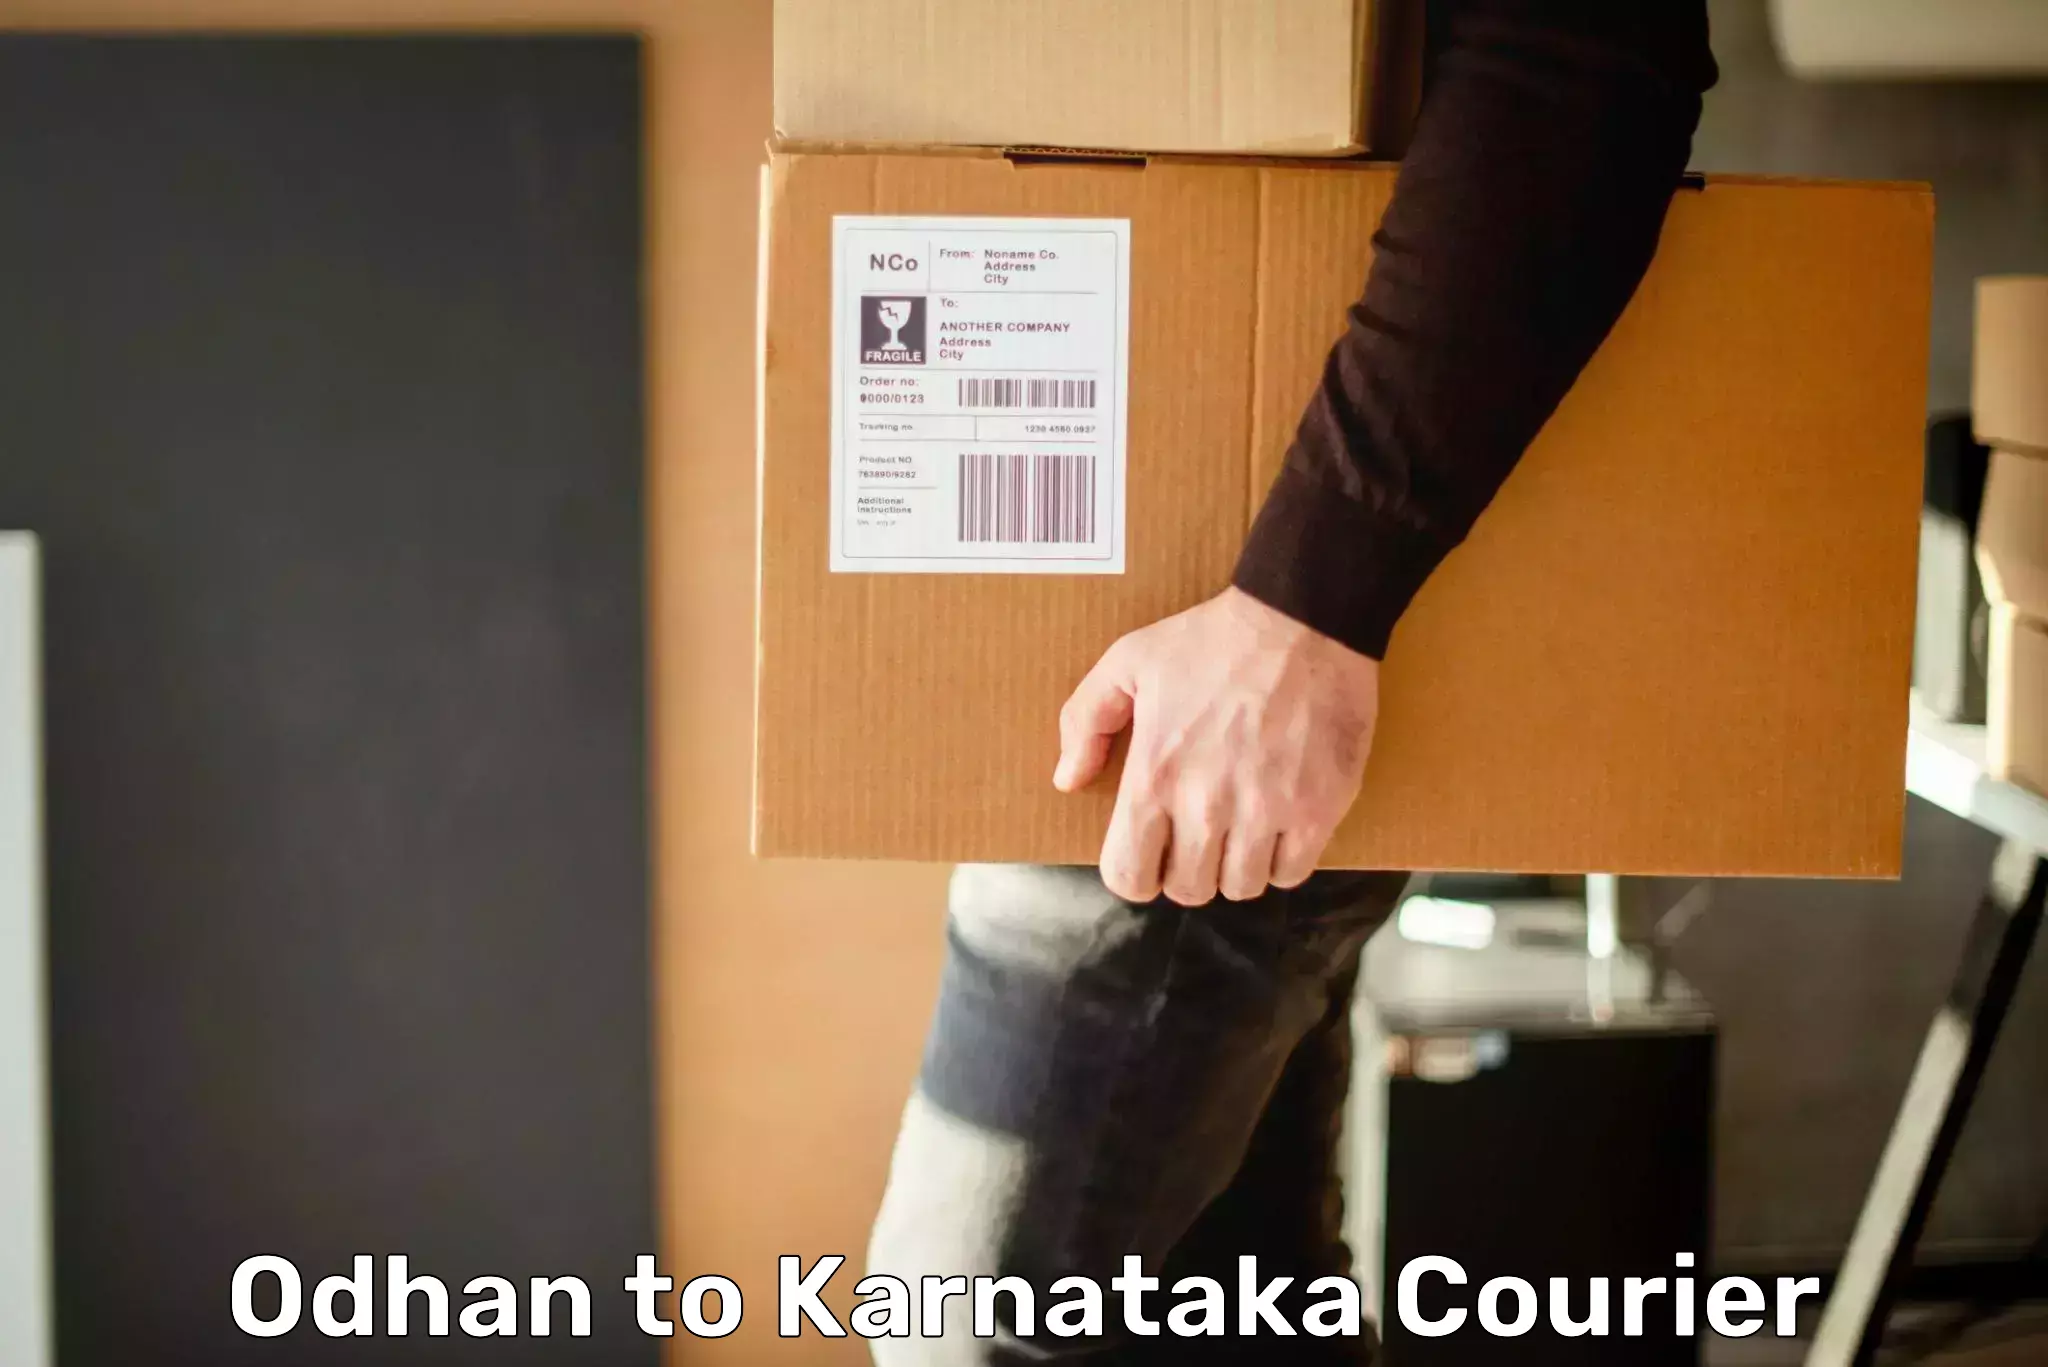 Package delivery network Odhan to Karnataka